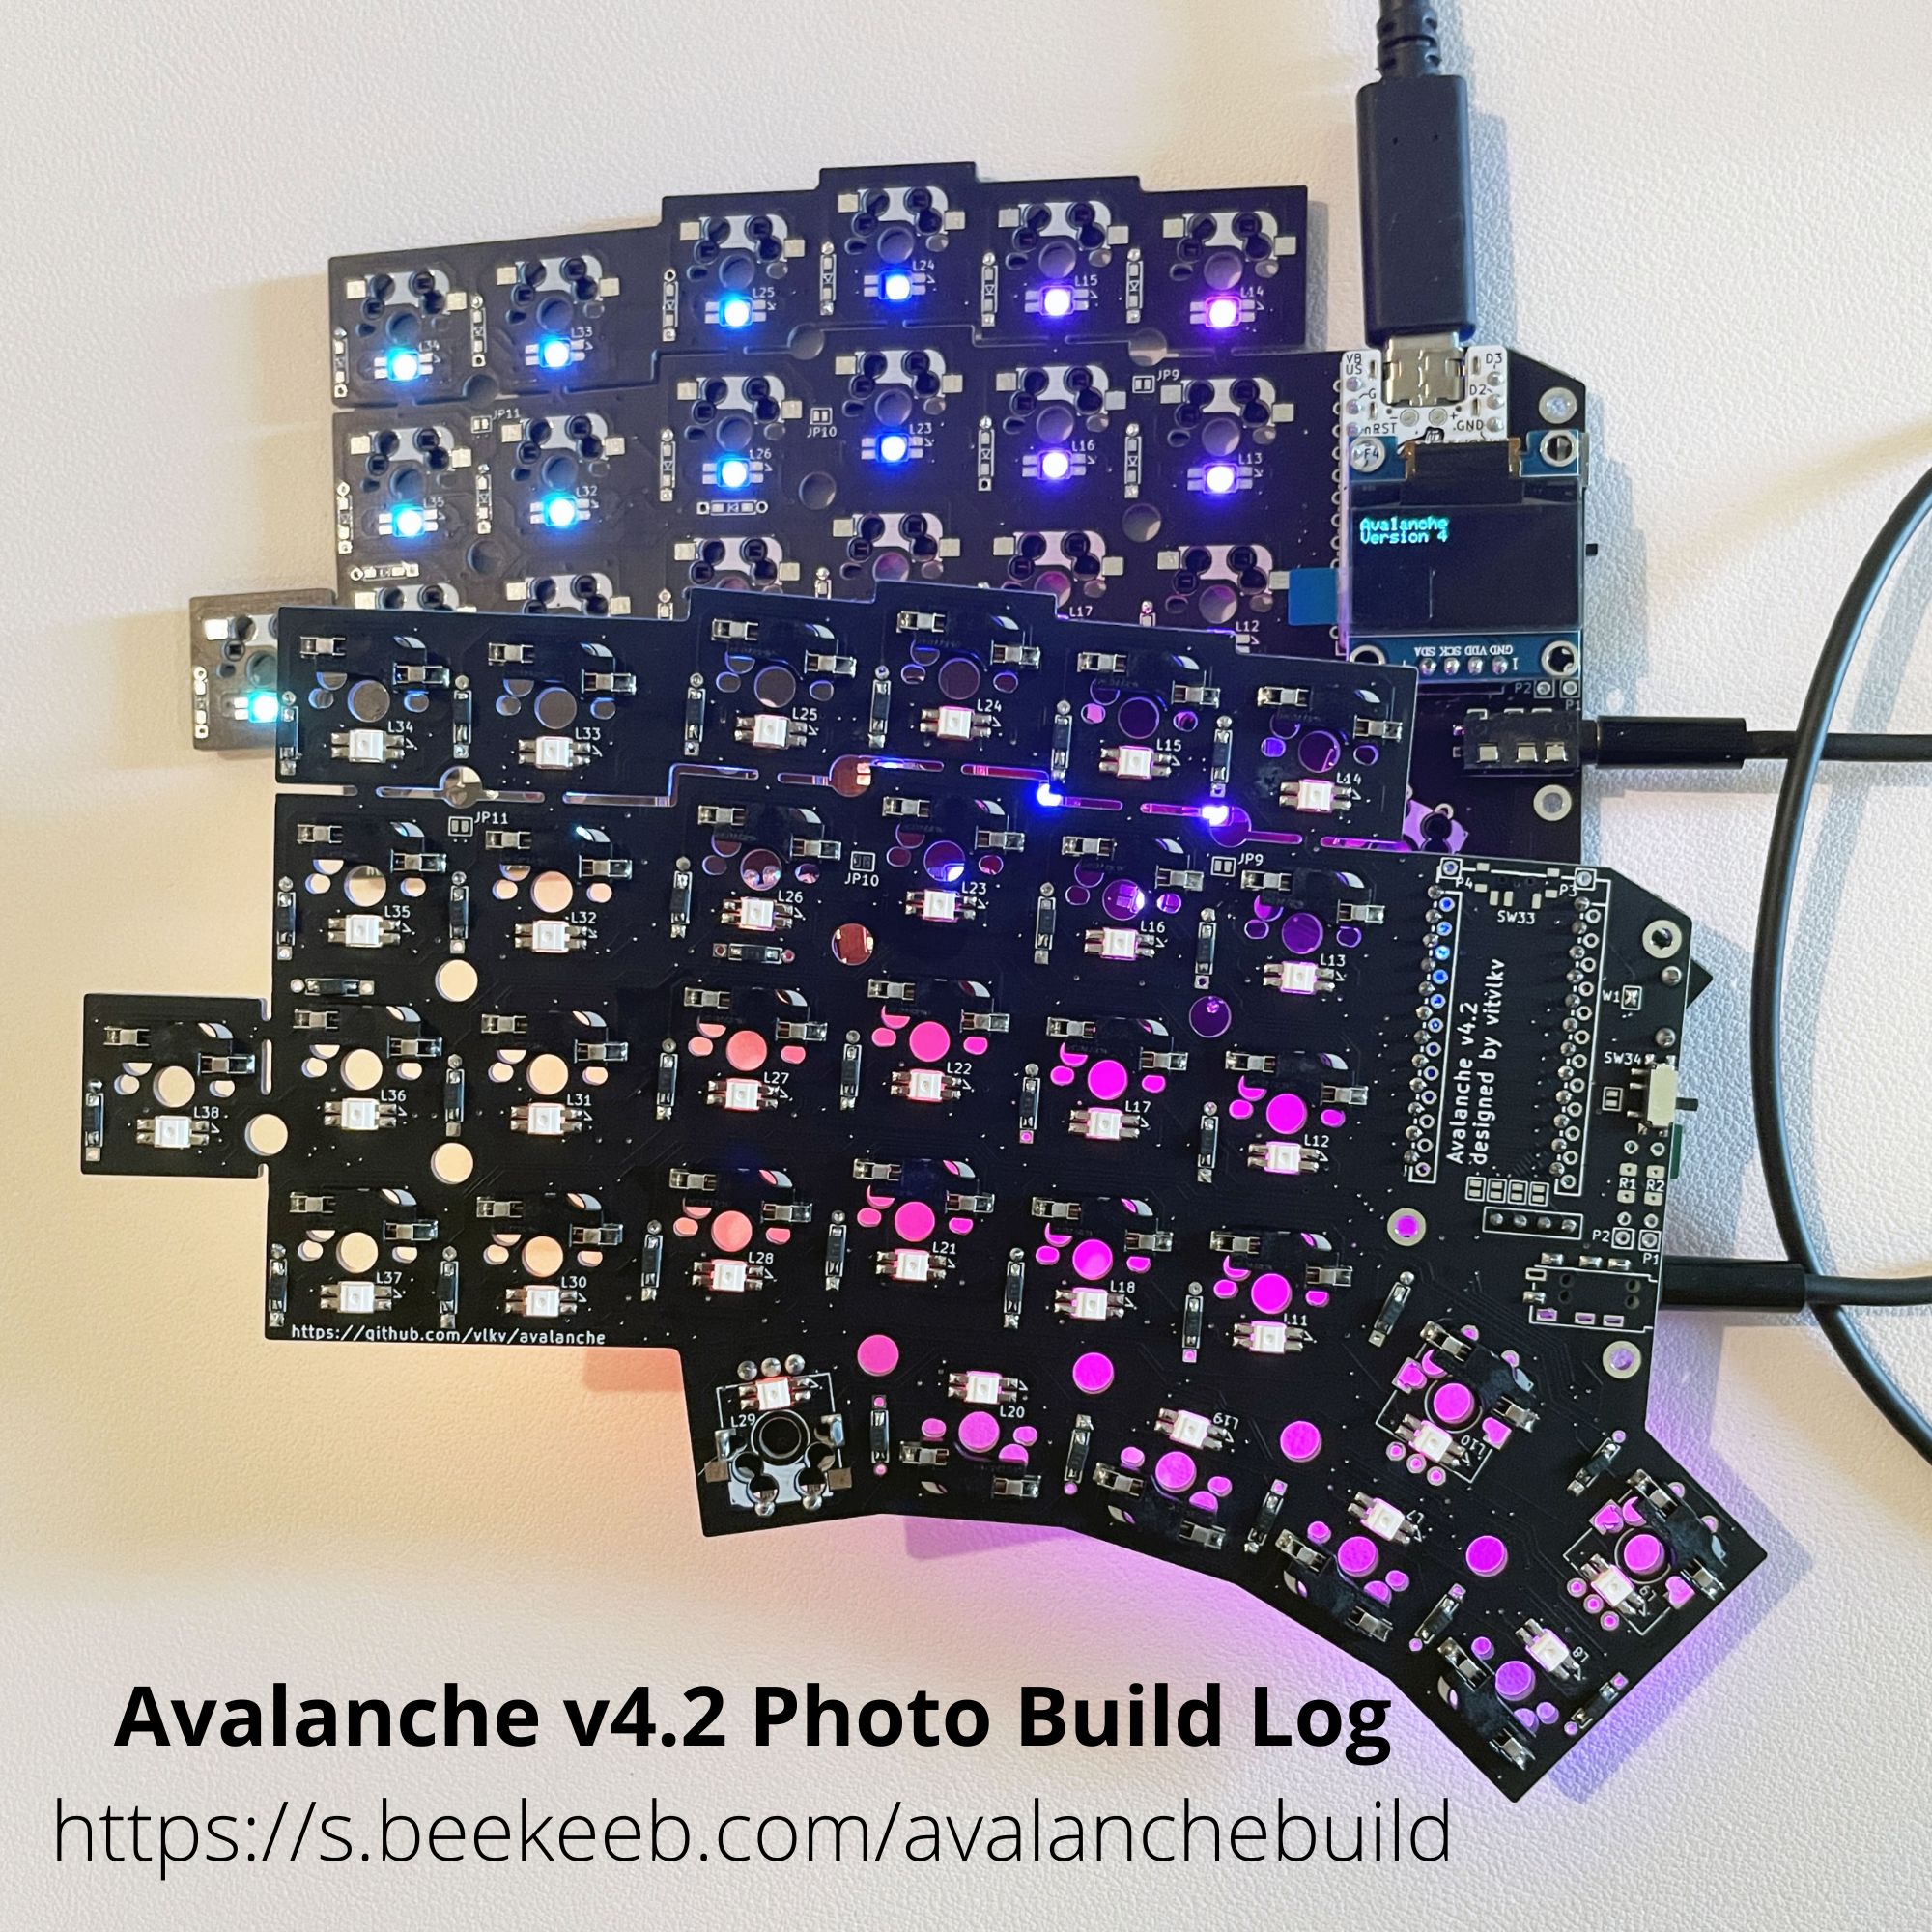 Avalanche v4 (v4.2) 40 or 60% Split Ergonomic Keyboard Kit